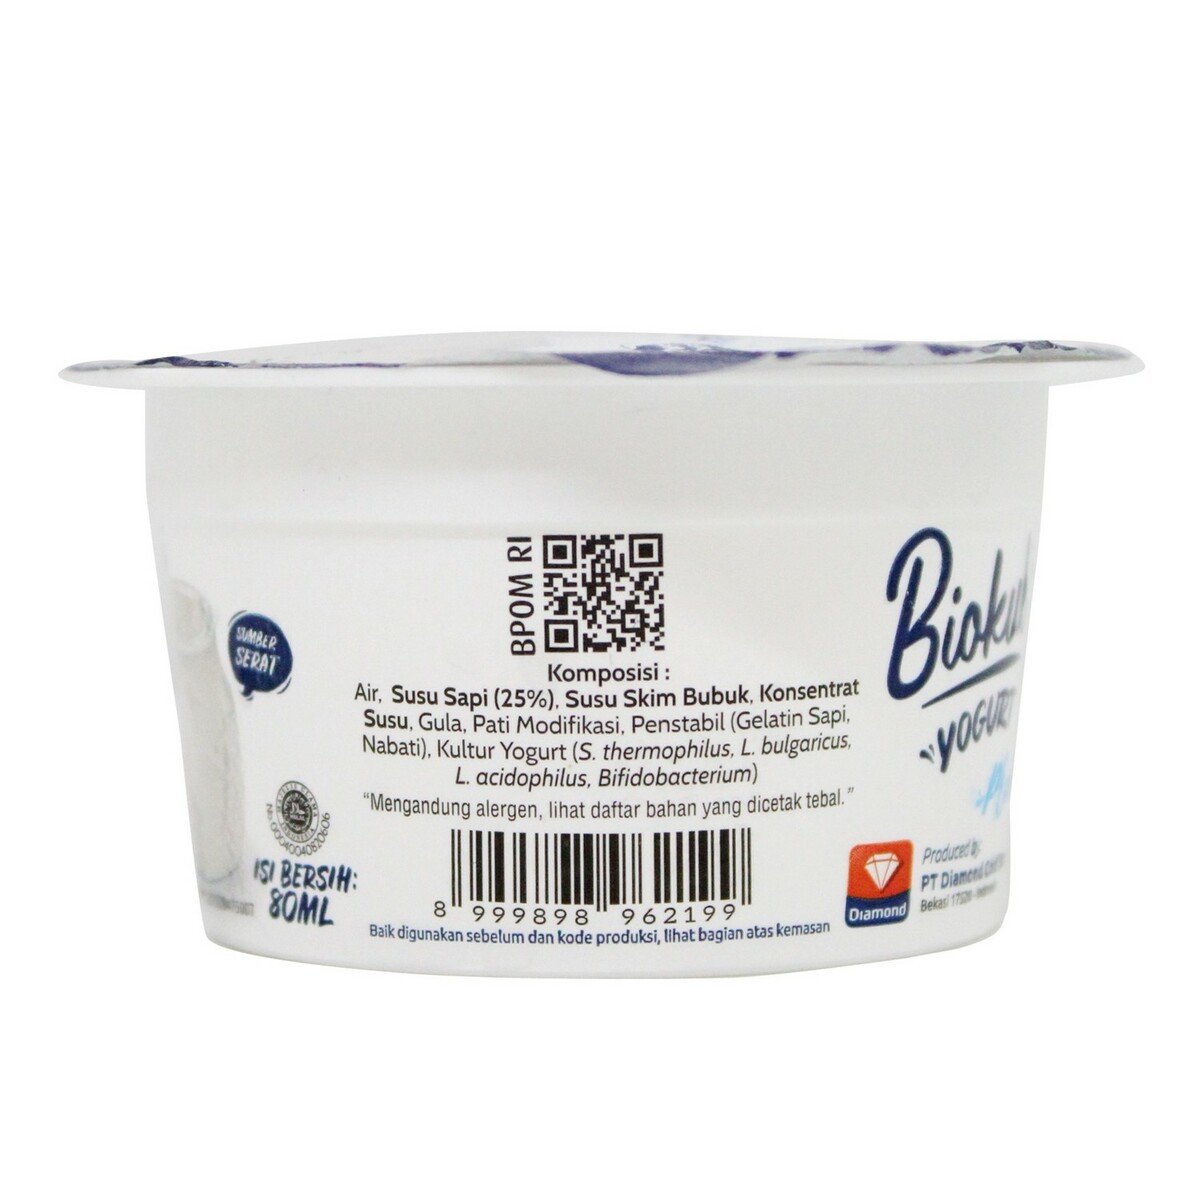 Biokul Yogurt Greek Plain 80ml